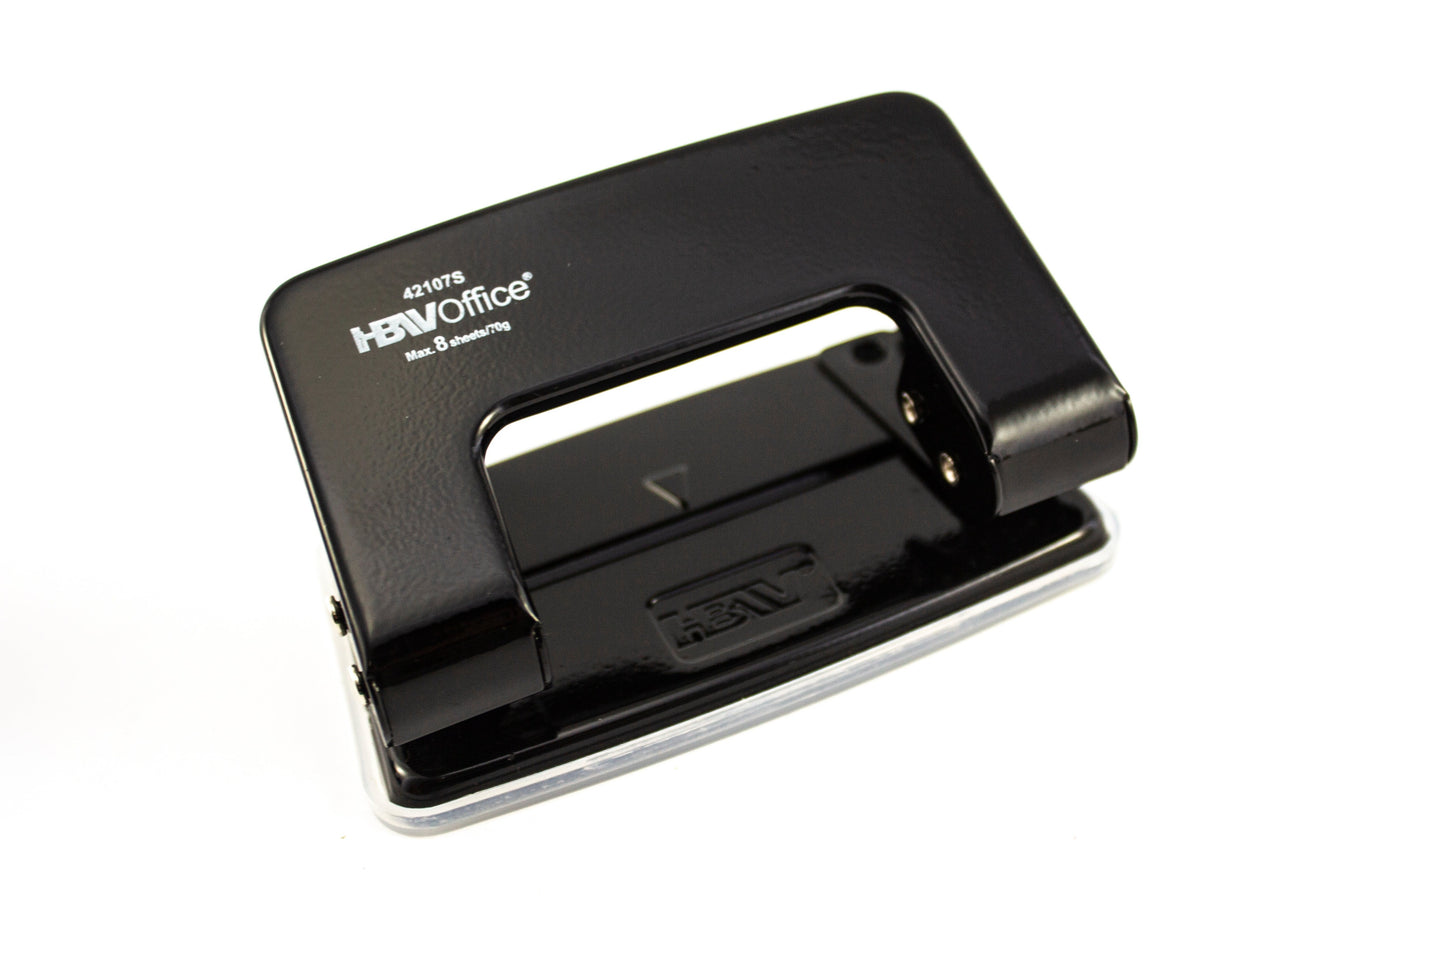 HBW Office Mini Puncher No. 42107S